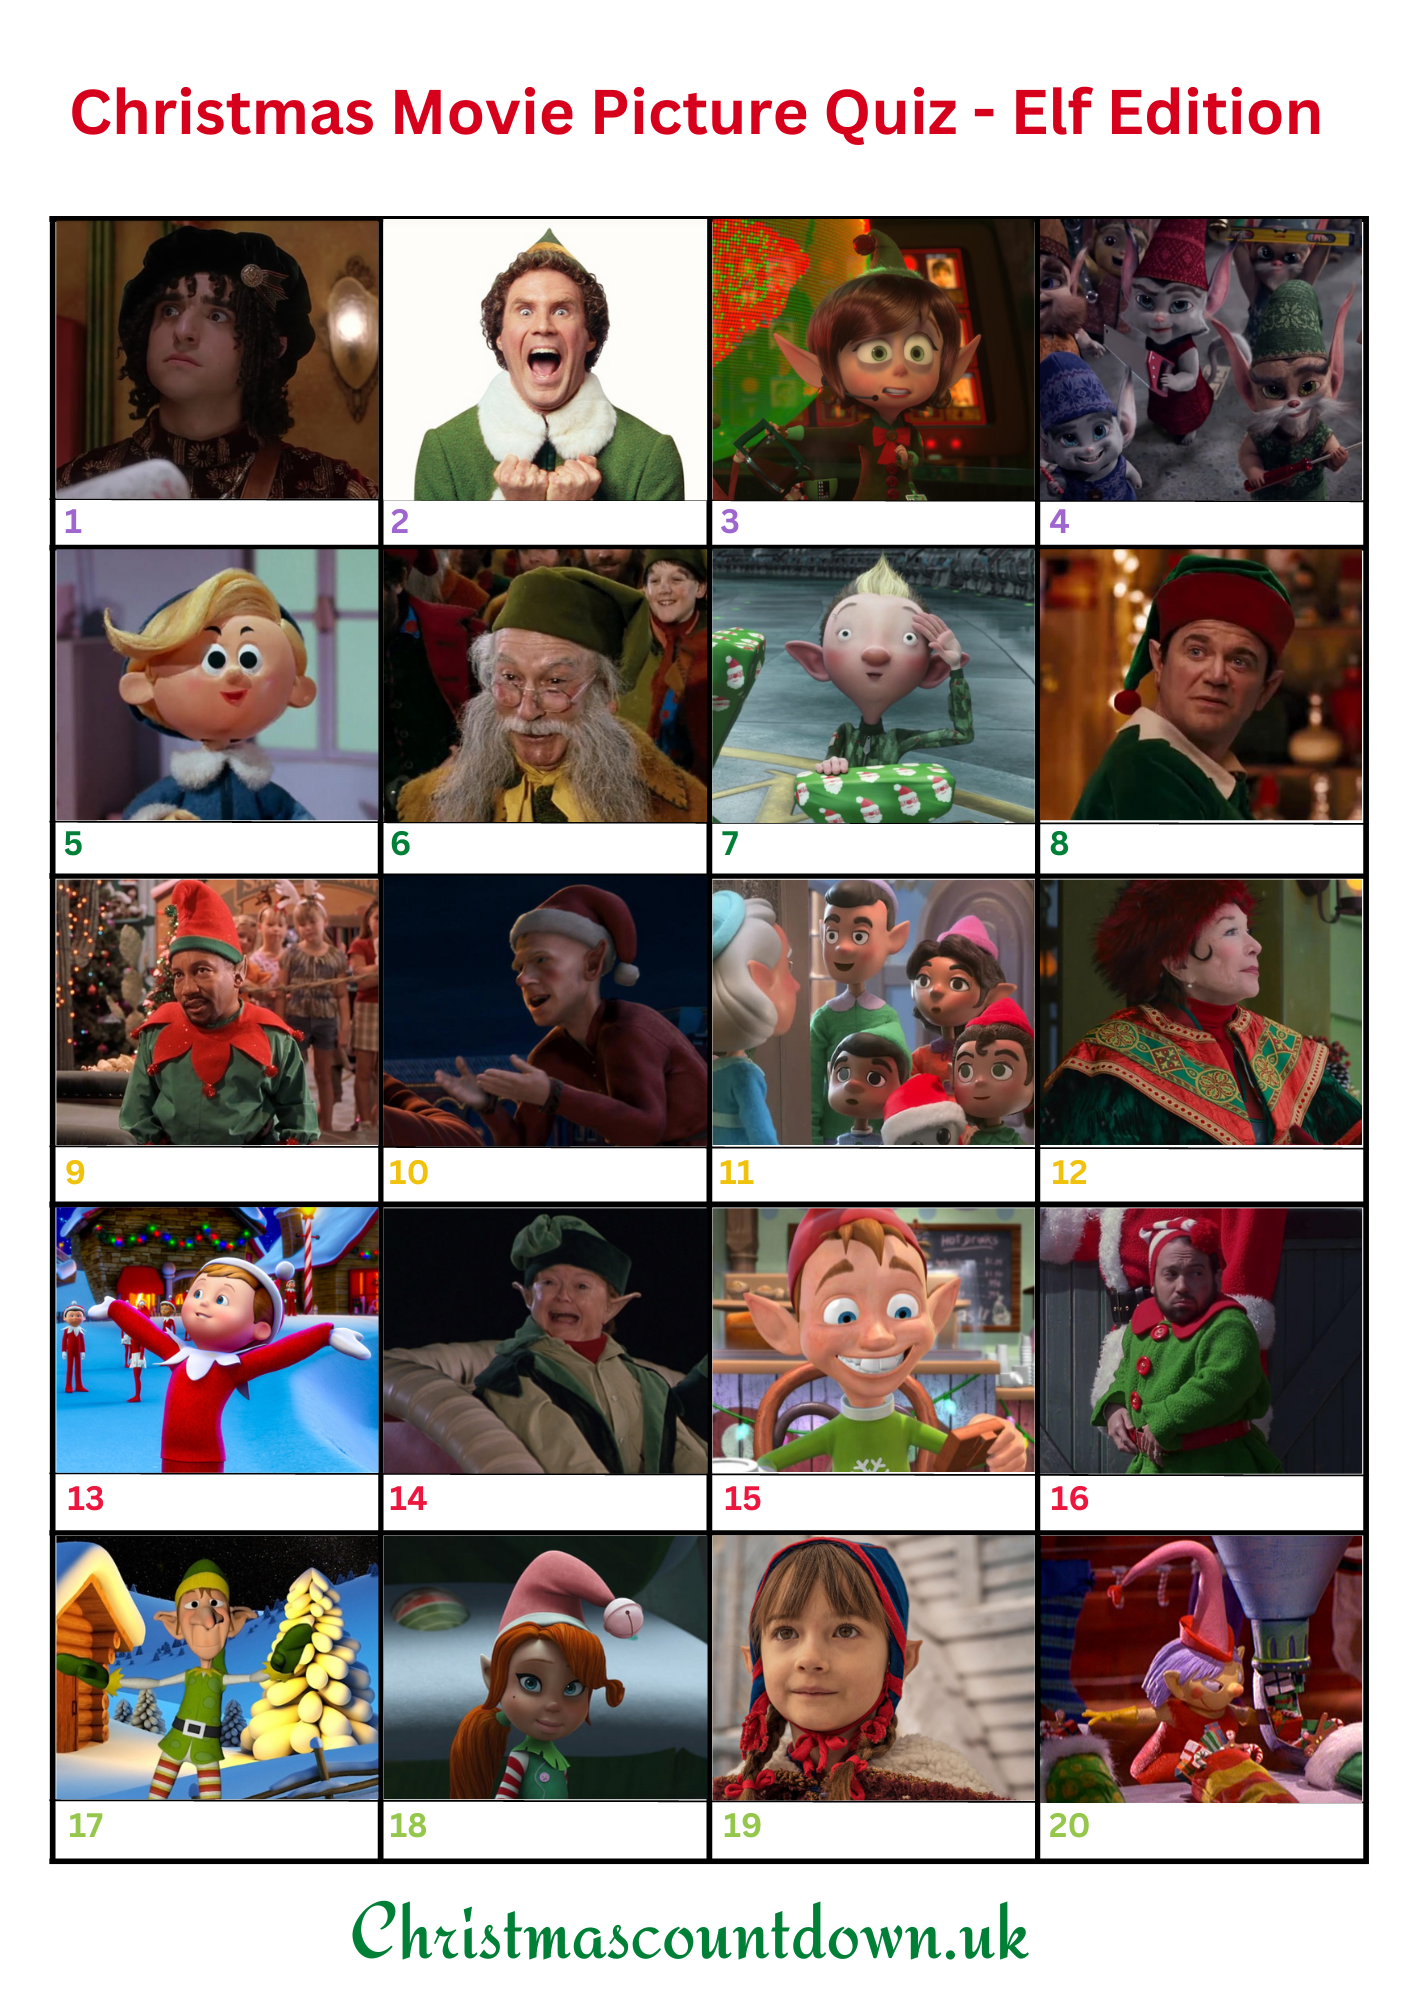 Christmas Movie Picture Quiz - Elf Edition